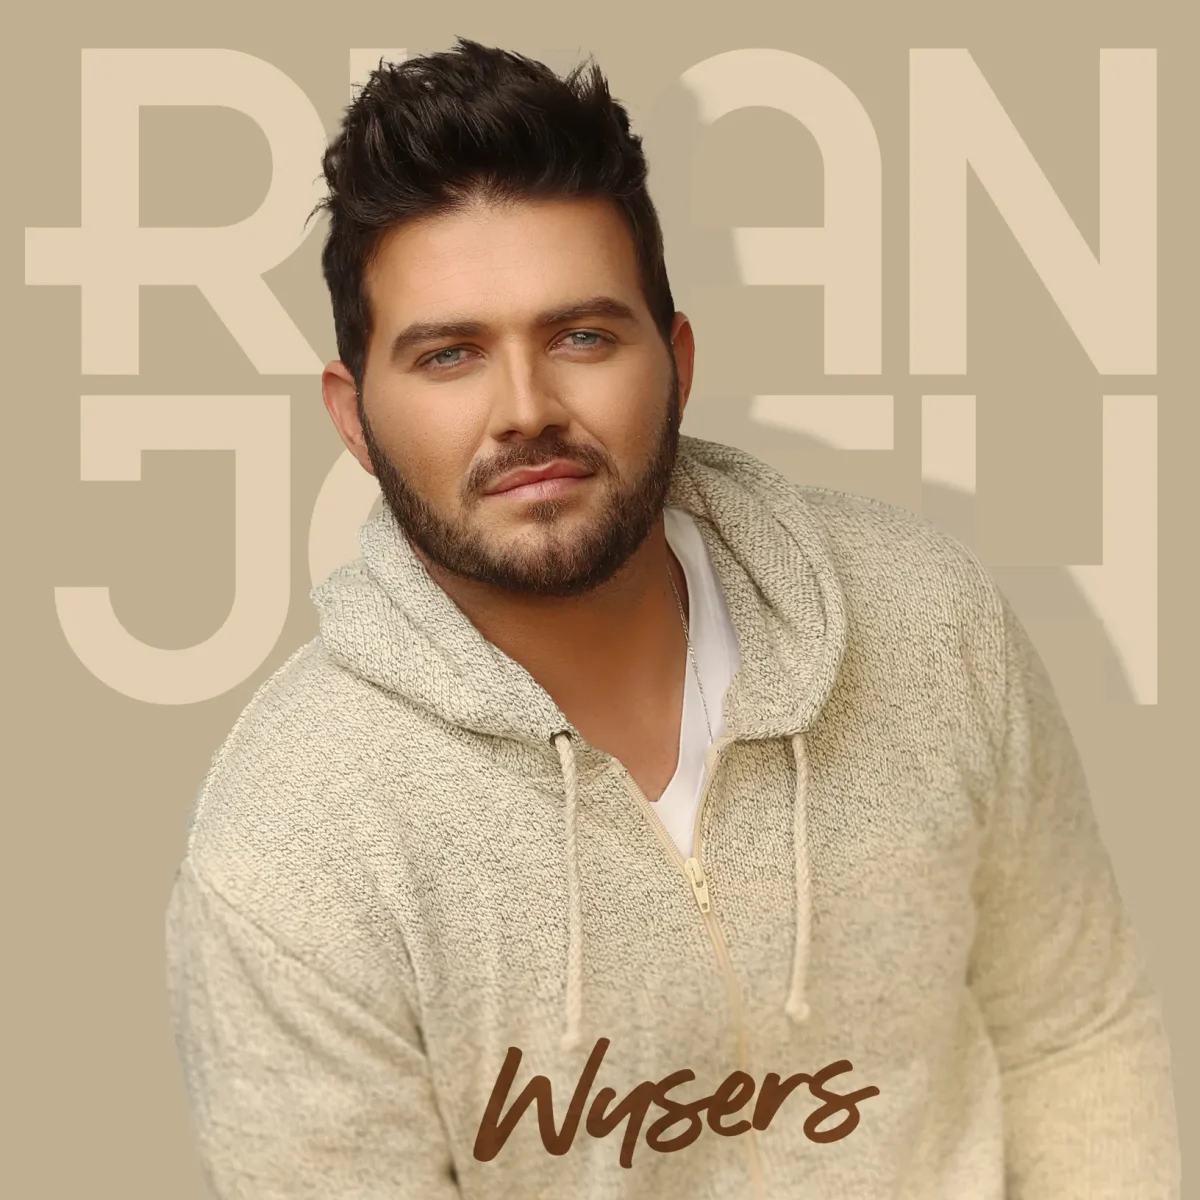 Ruan Josh – Wysers Album